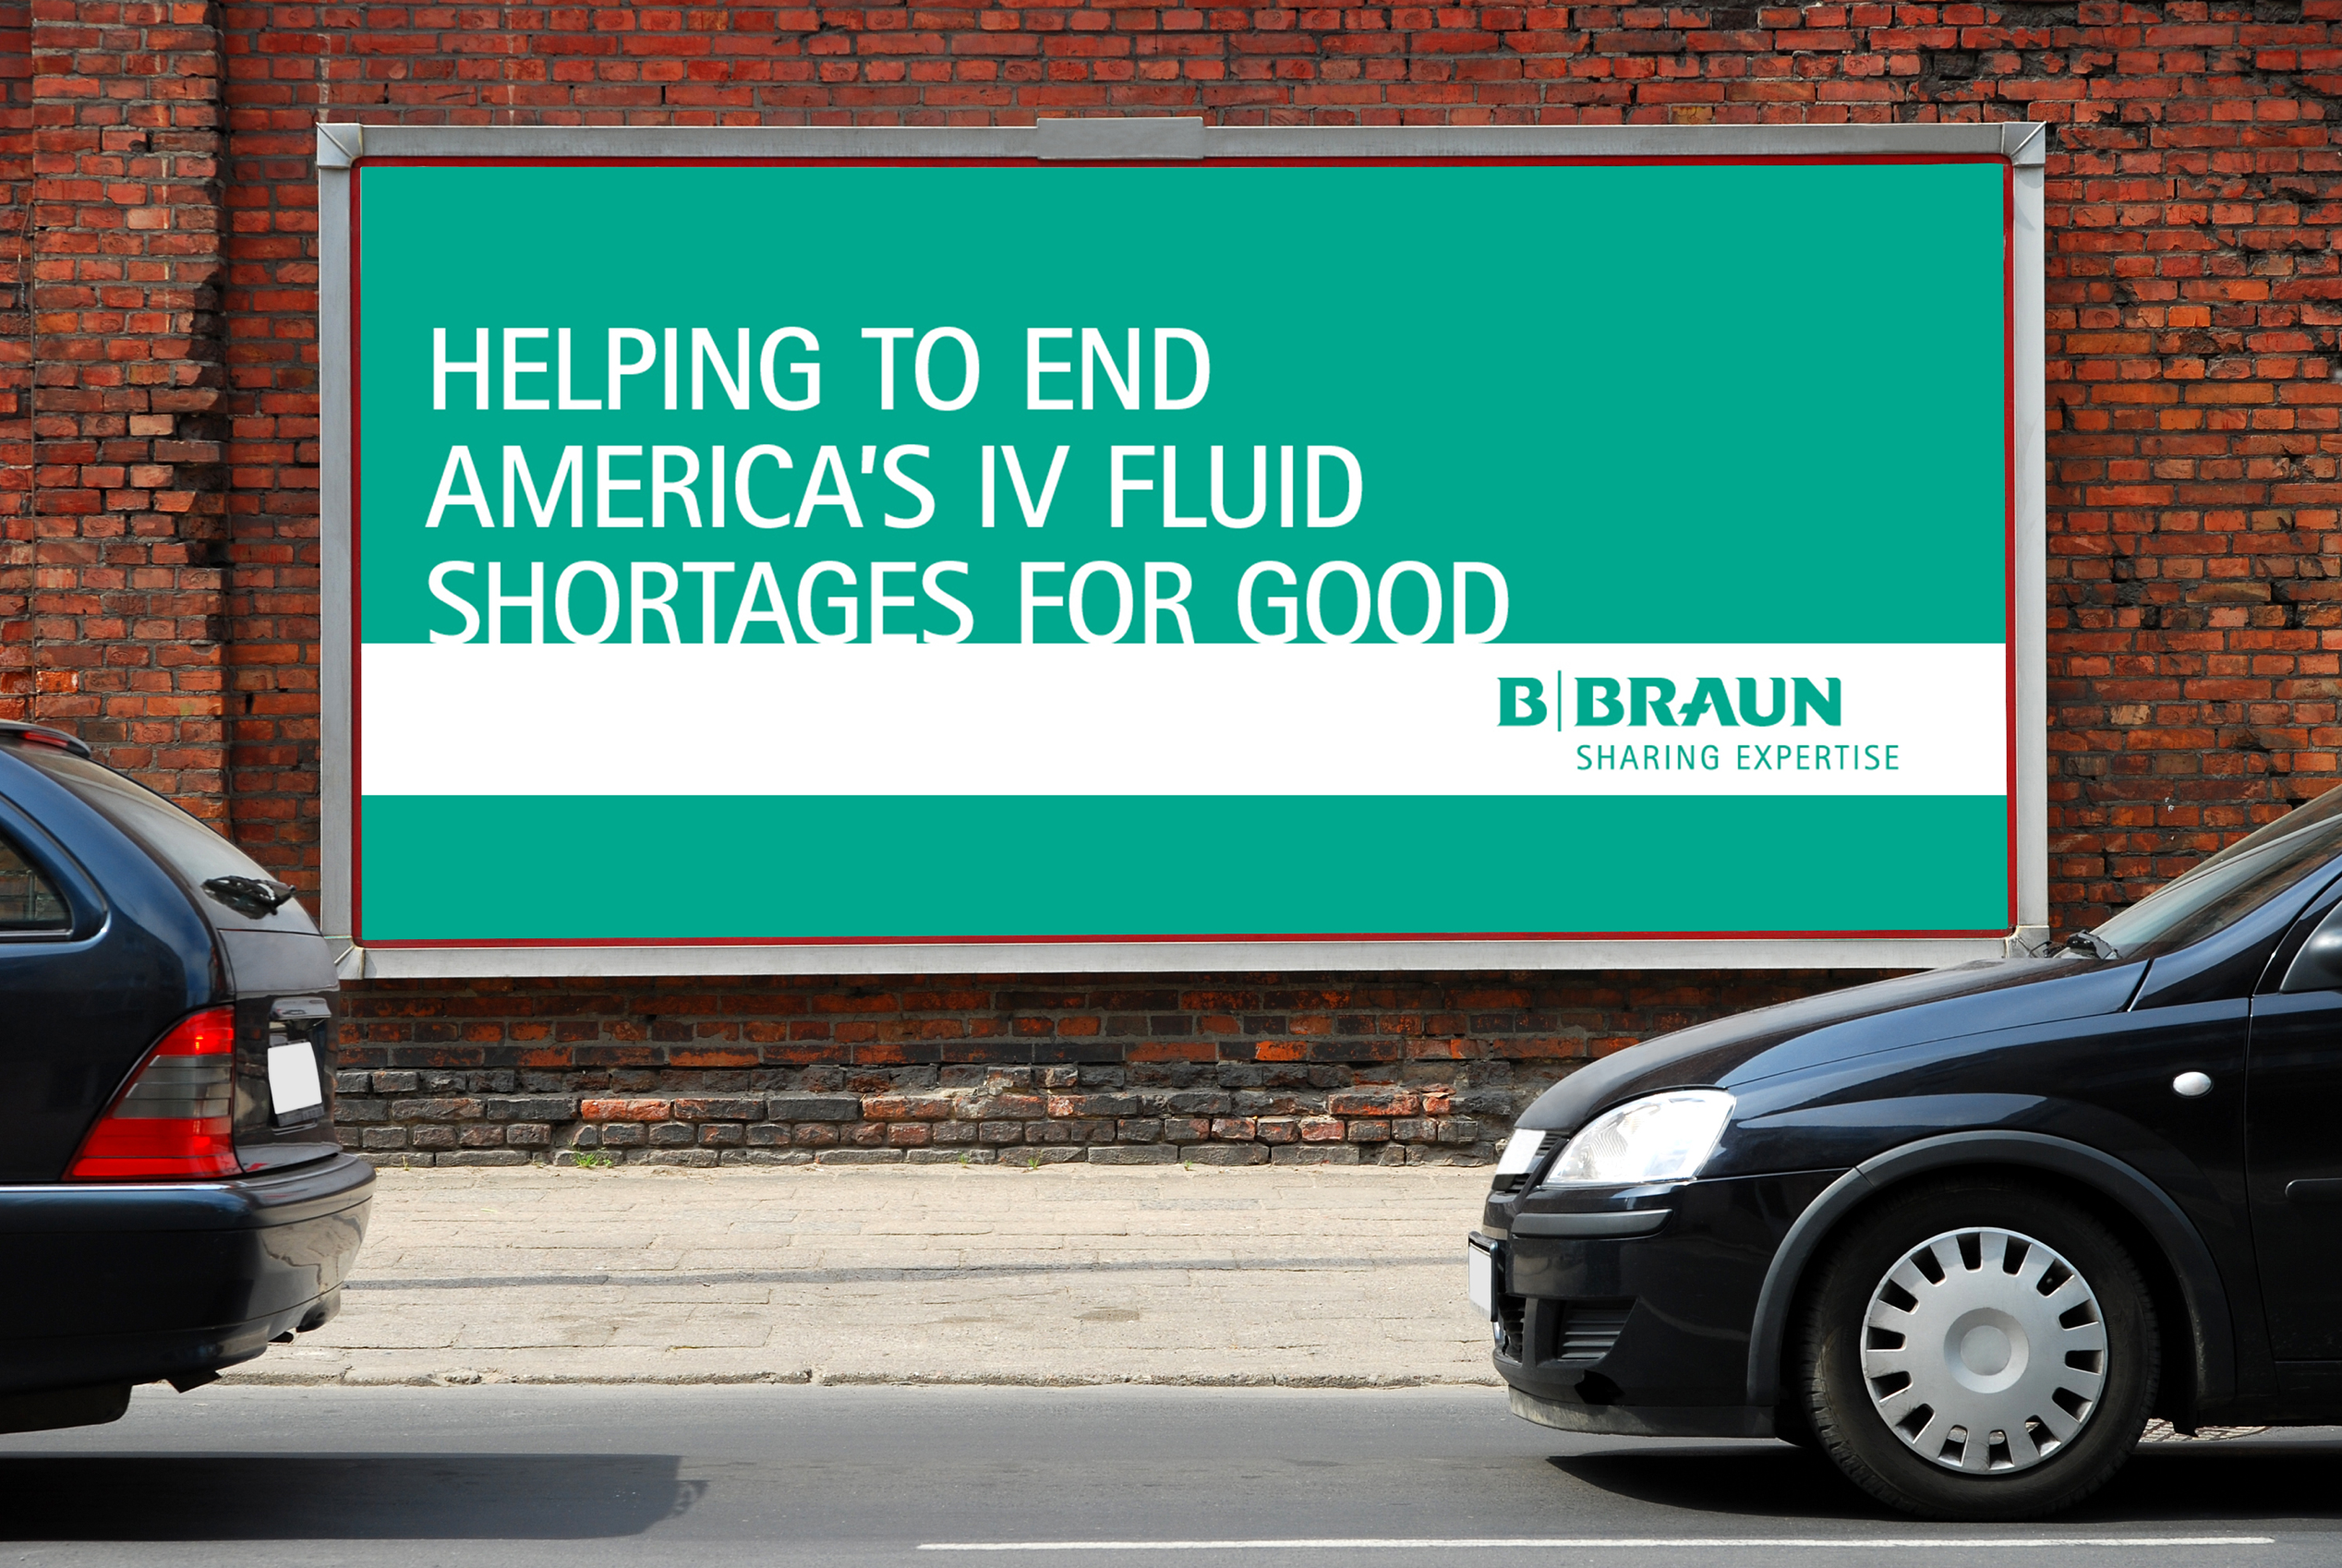 b braun sharing expertise billboard image